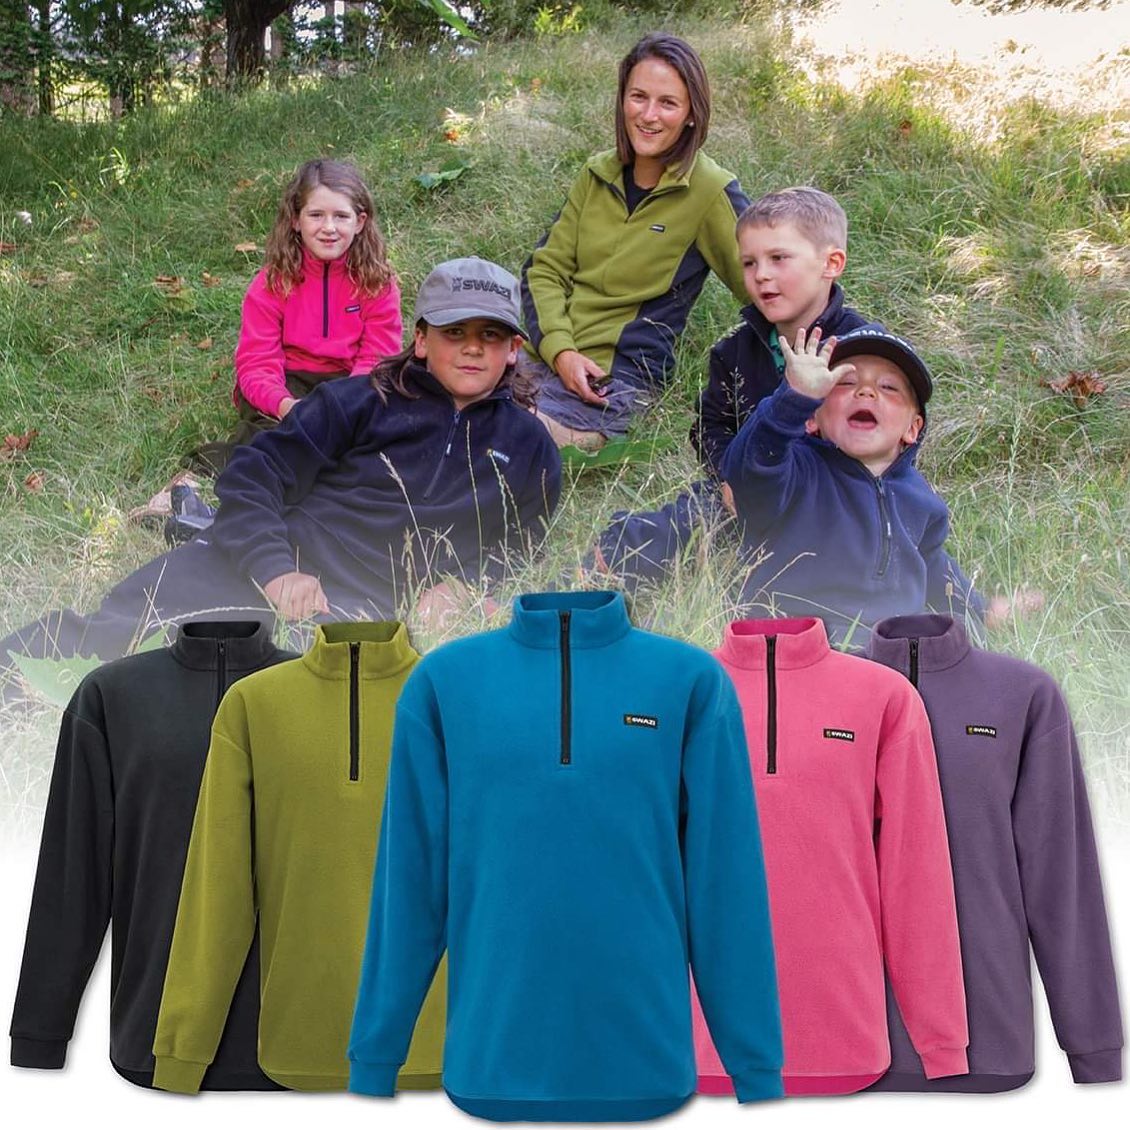 Swazi Kids Micro Shirt - Iron Sand -  - Mansfield Hunting & Fishing - Products to prepare for Corona Virus